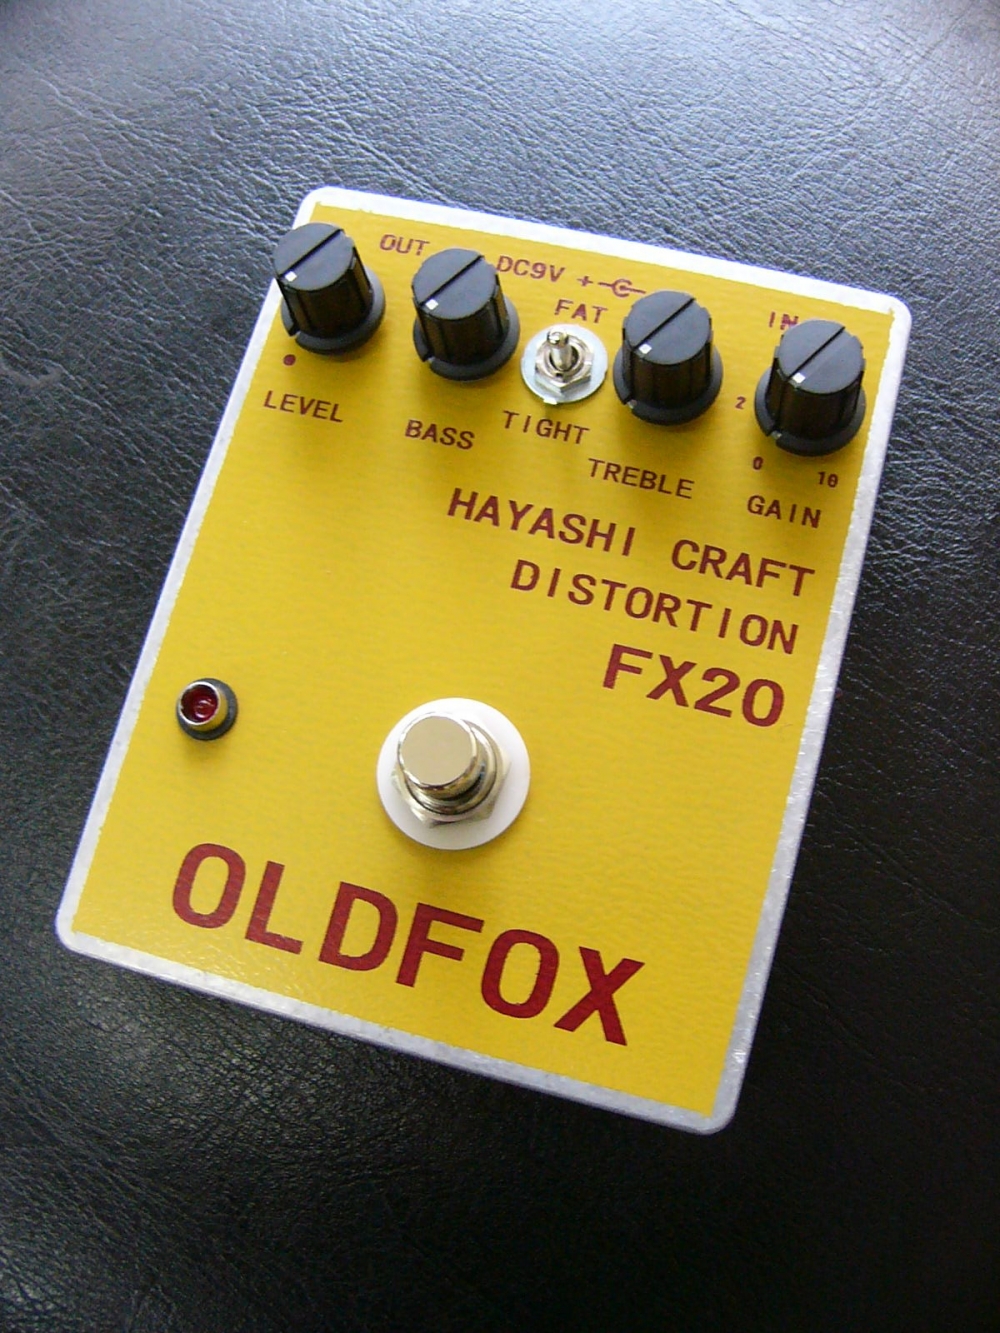 HAYASHI CRAFT FX-20 OLD FOX